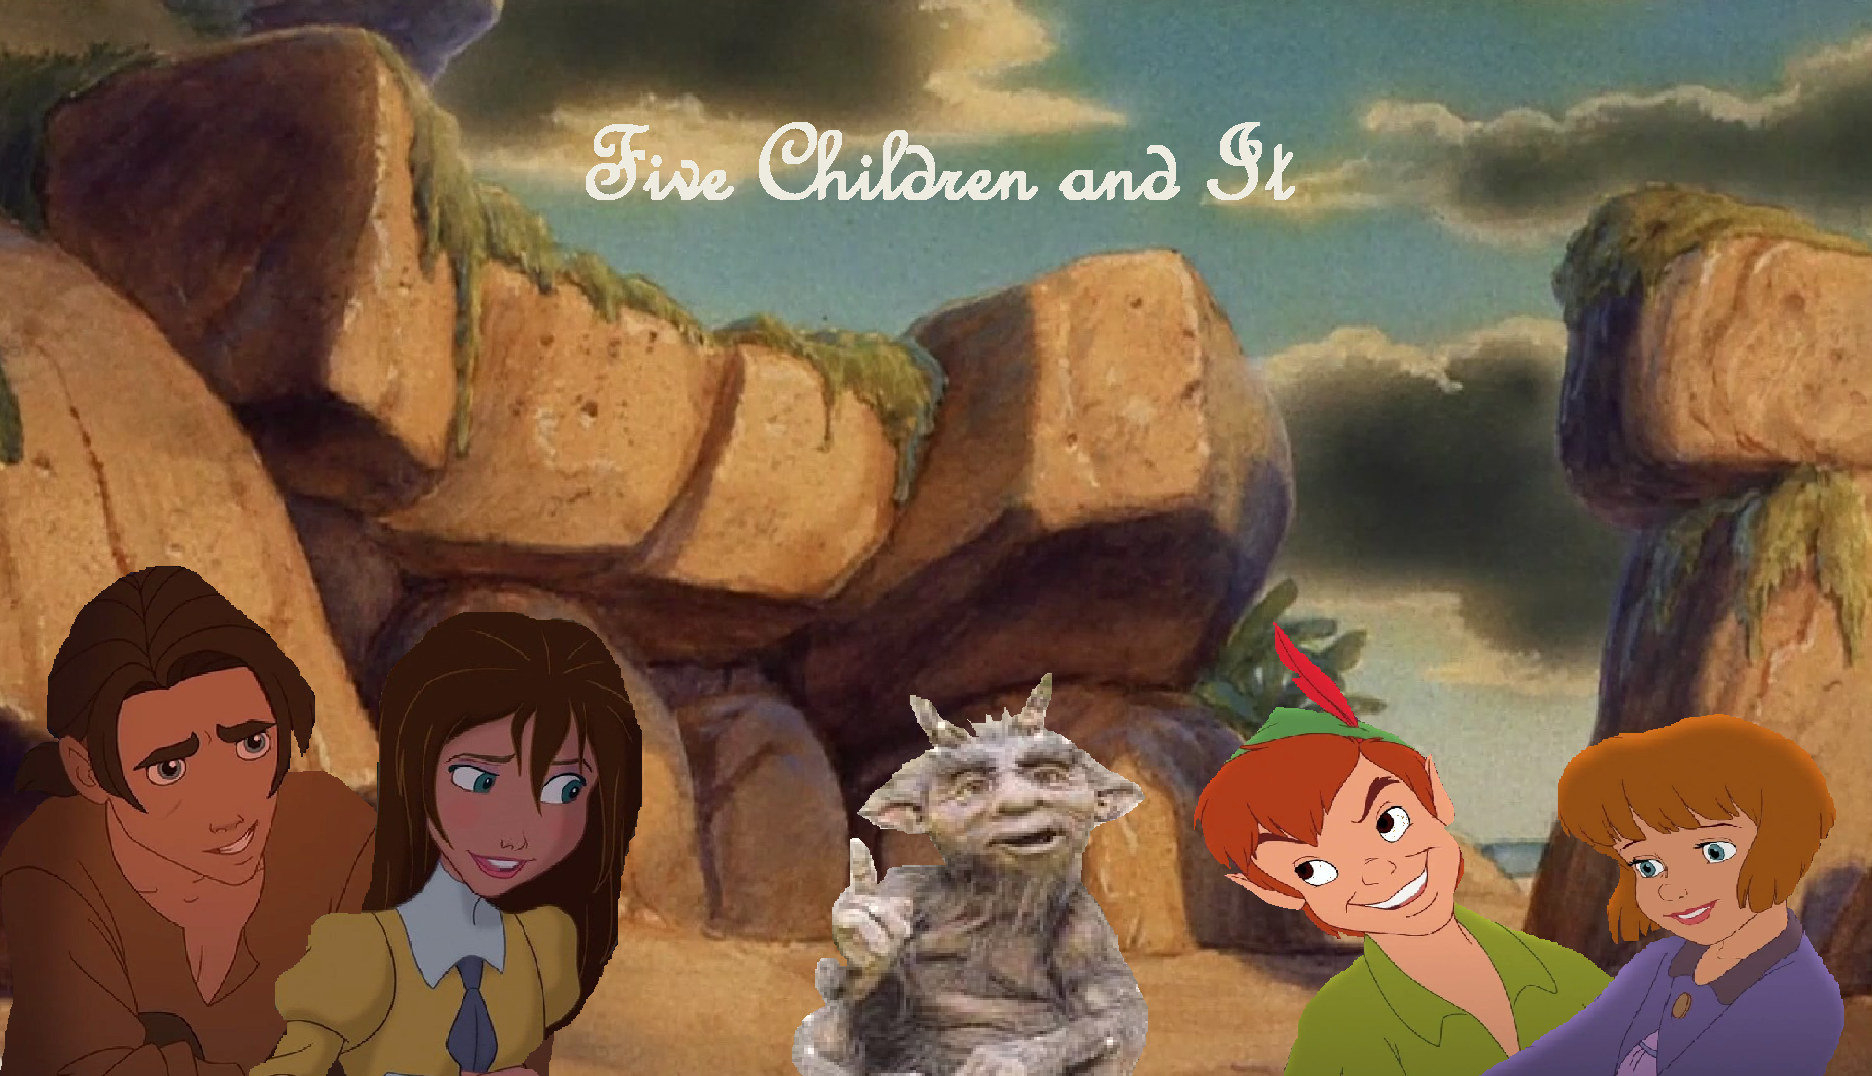 Disney's Five Children and It